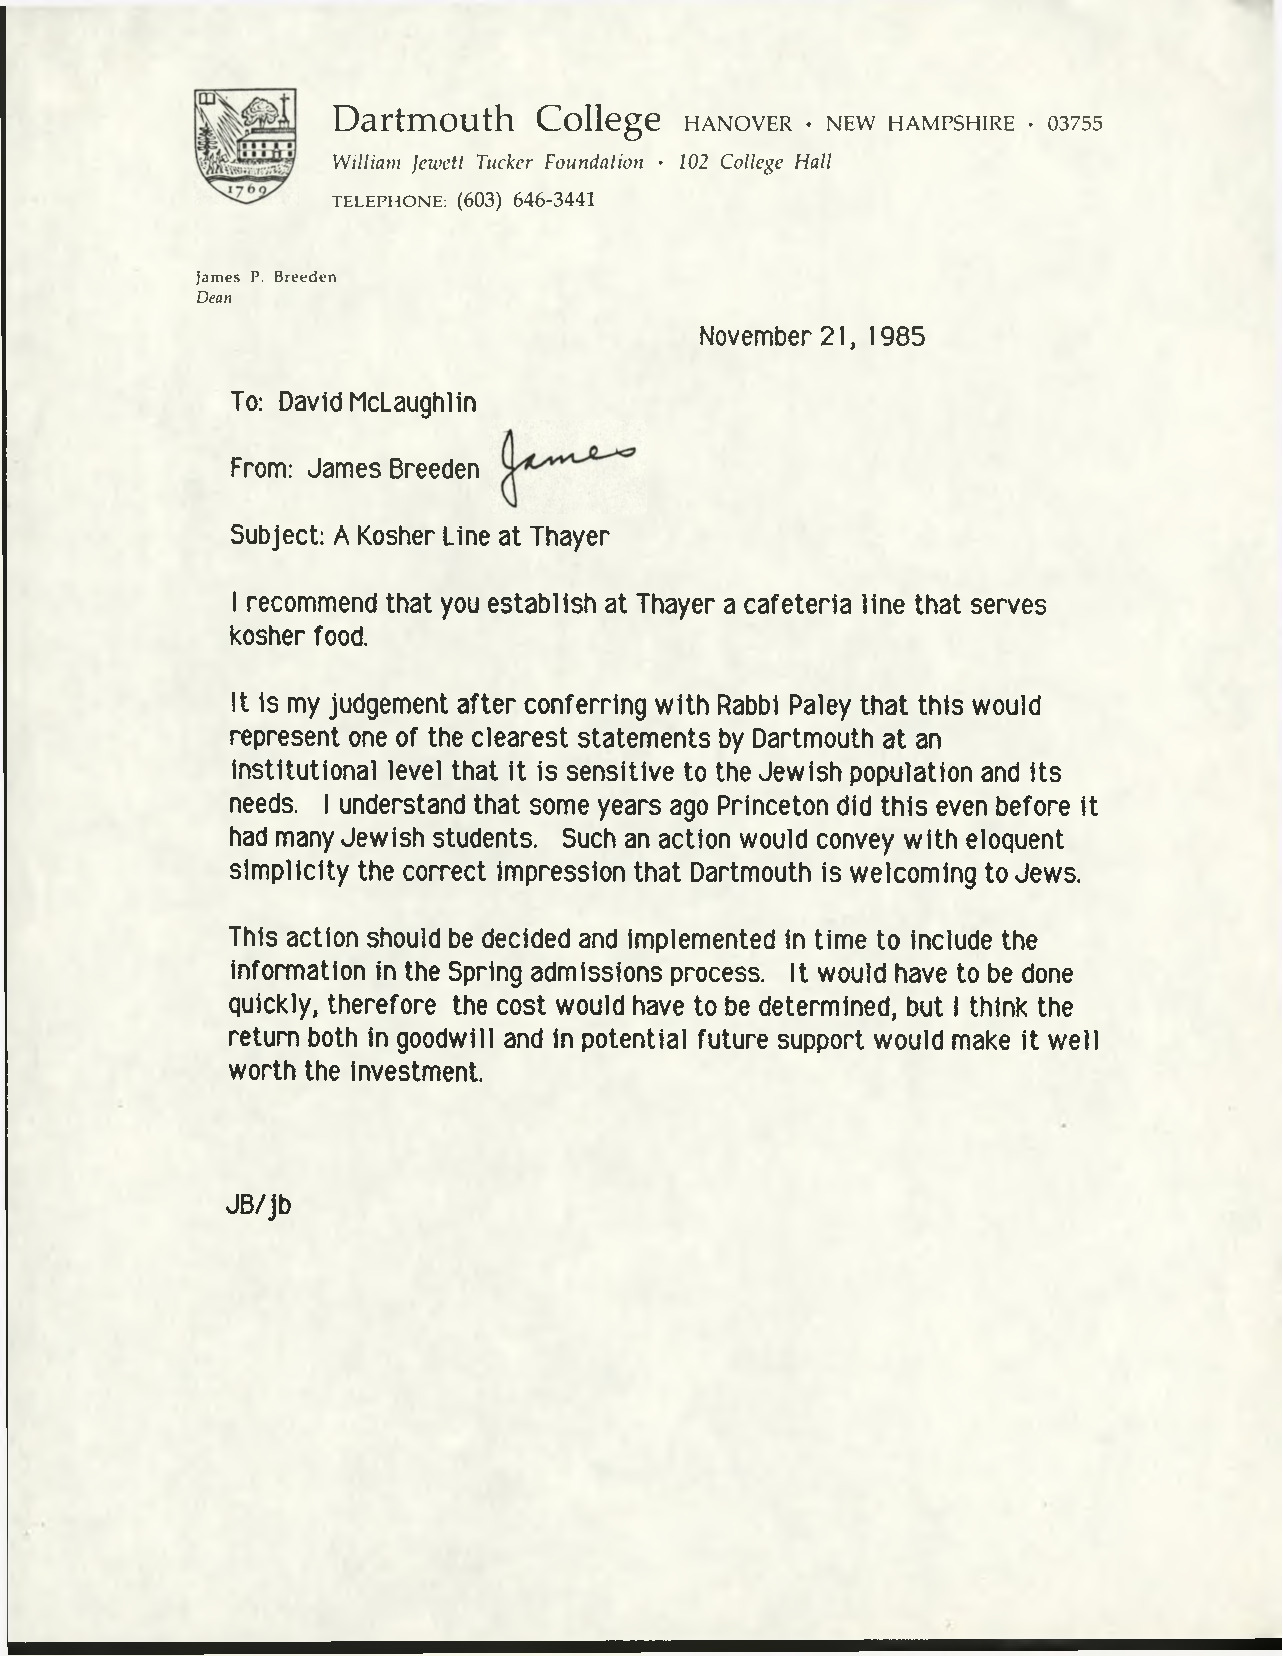 Dean of the Tucker Foundation Letter to Dartmouth President David McLaughlin